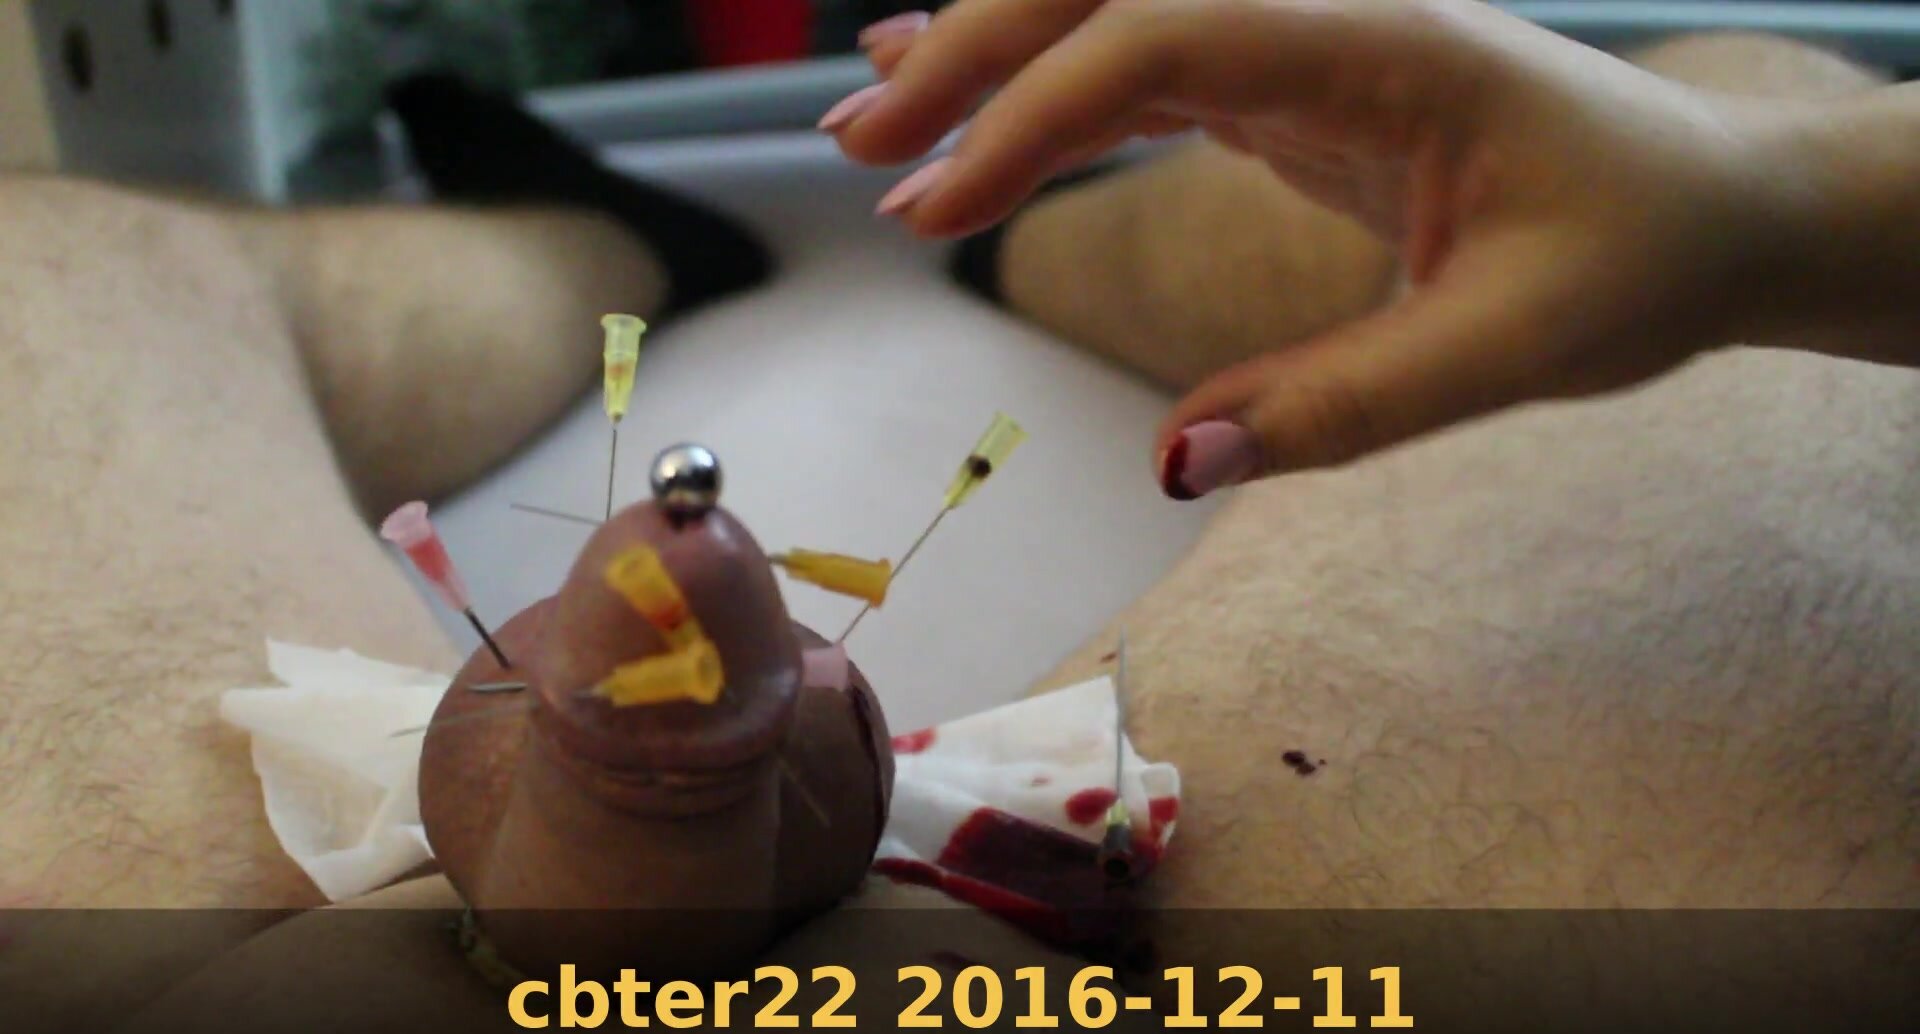 cbter22 2016-12-11 - needles removed pov